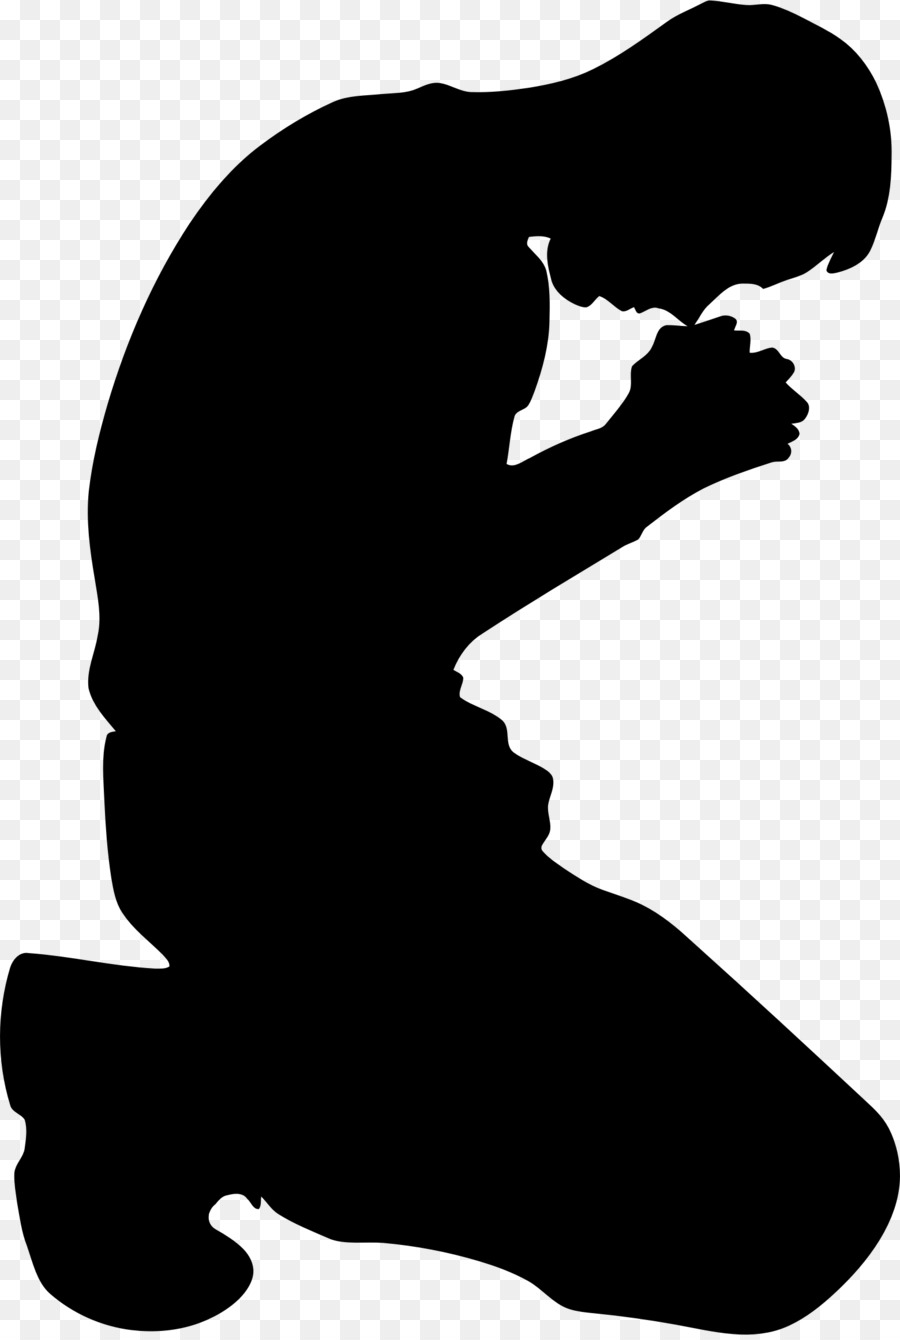 Praying Hands Kneeling Silhouette Clip art - prayer png download - 1560*2314 - Free Transparent Praying Hands png Download.